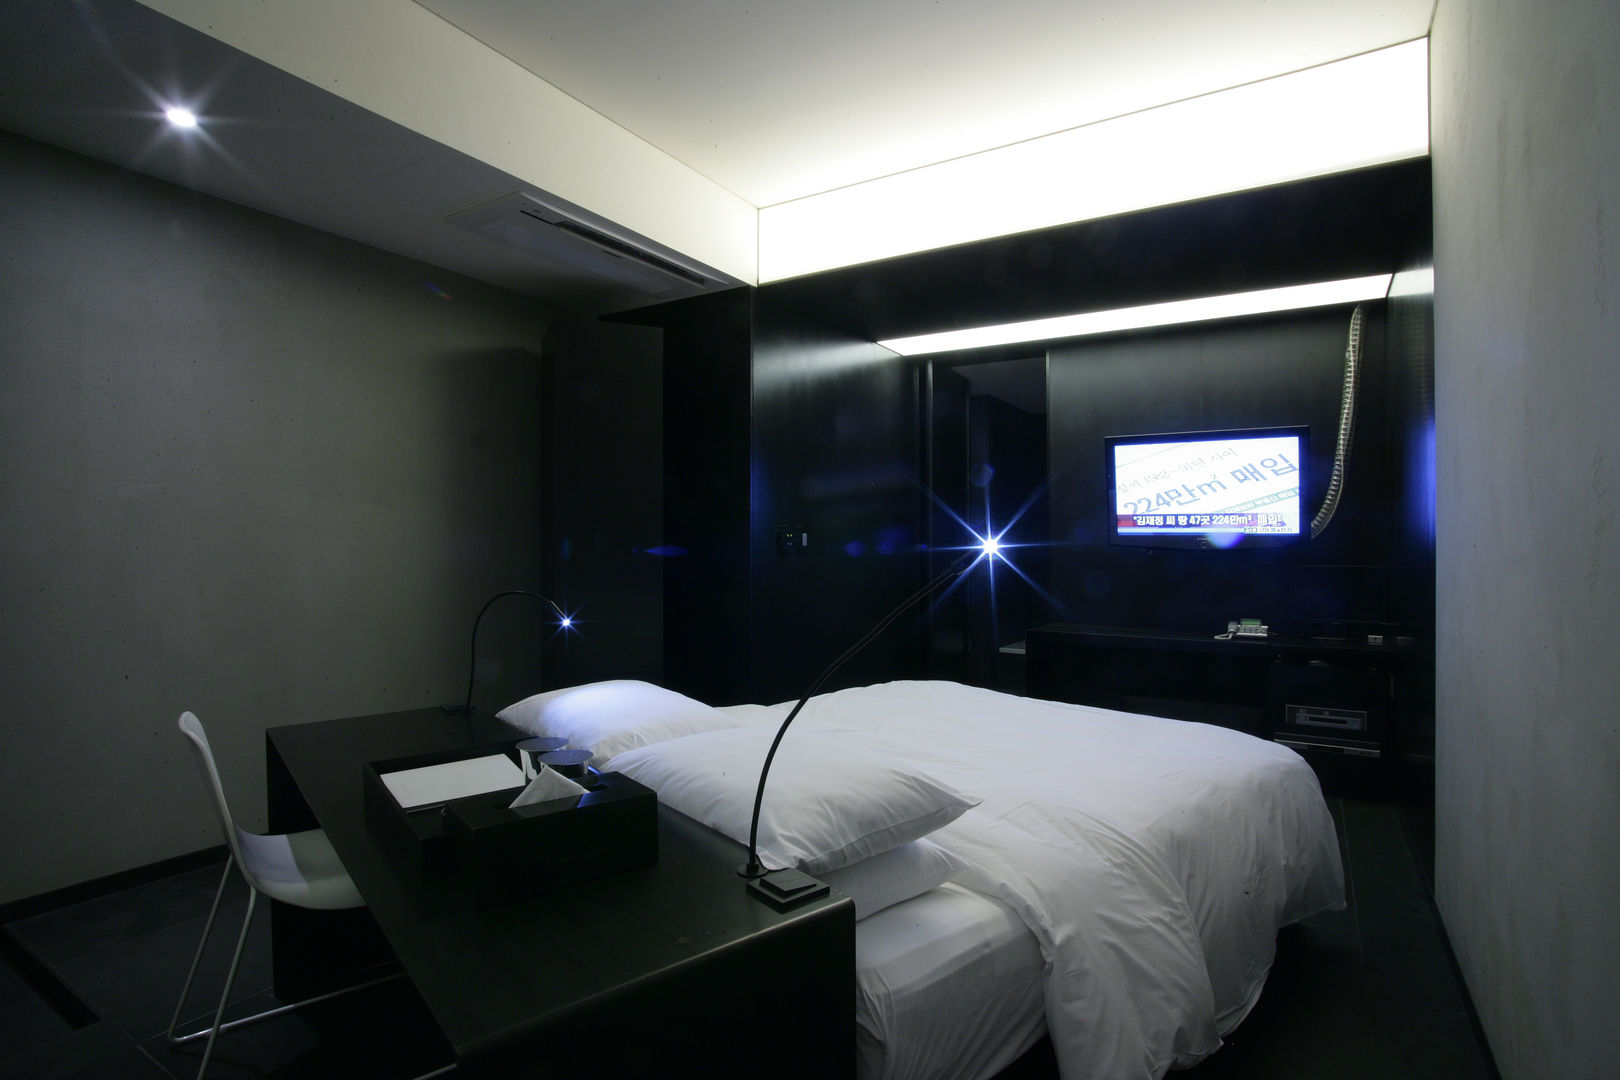 Hotel the mat (호텔 더매트), M's plan 엠스플랜 M's plan 엠스플랜 Dormitorios de estilo minimalista